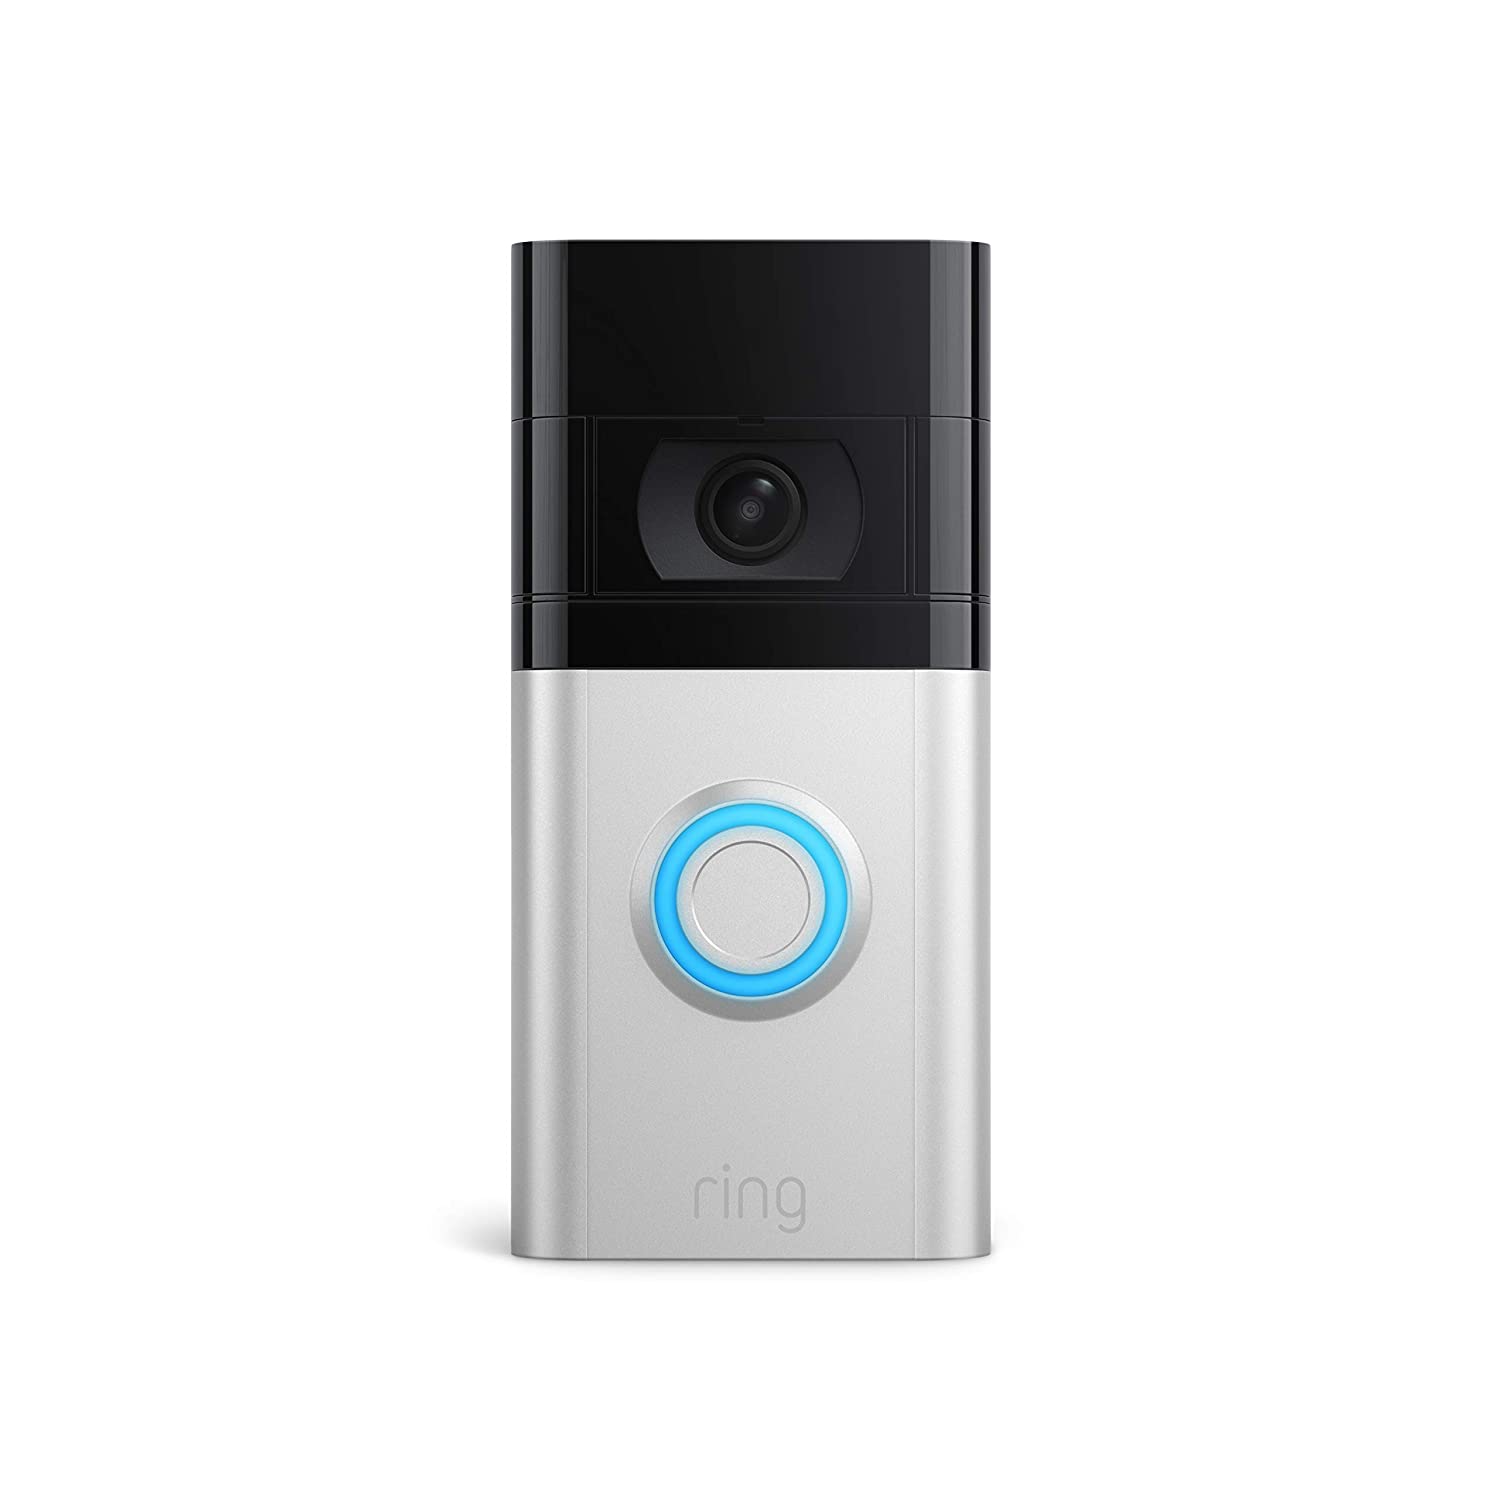 All-new Ring Video Doorbell 4 (2021 Release)￼